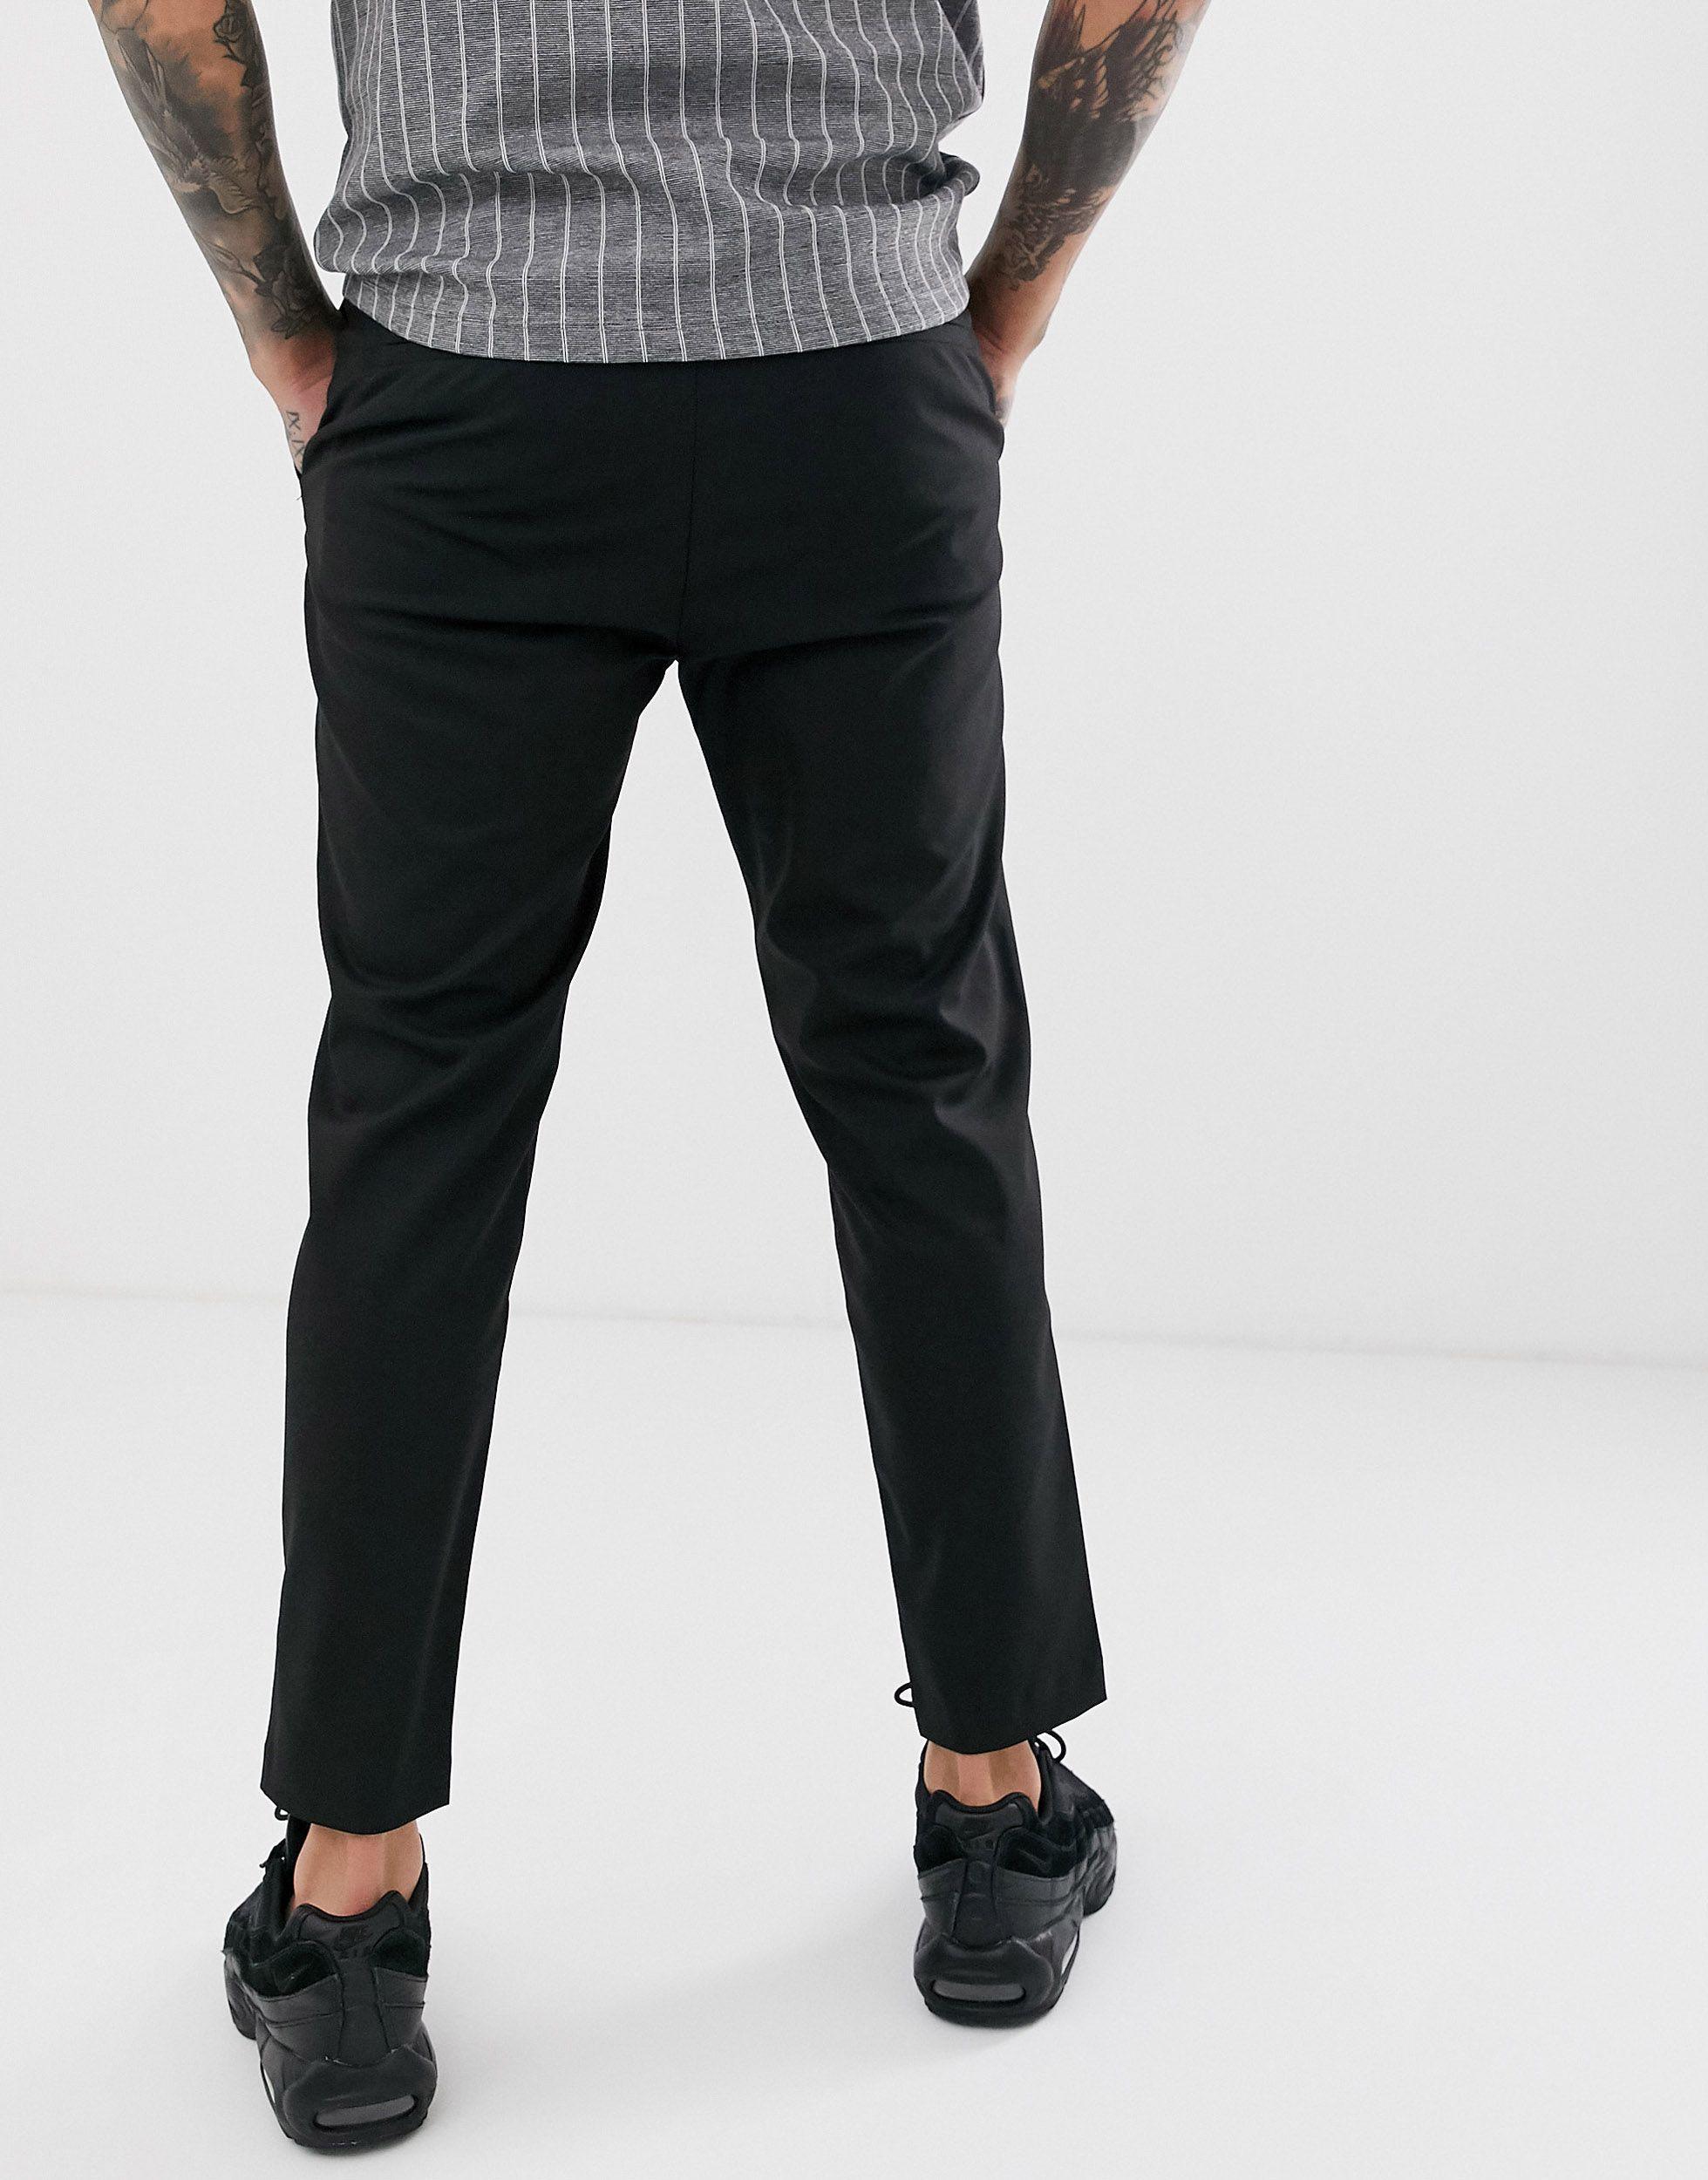 Bershka Skinny Cropped Trousers in Black for Men - Lyst